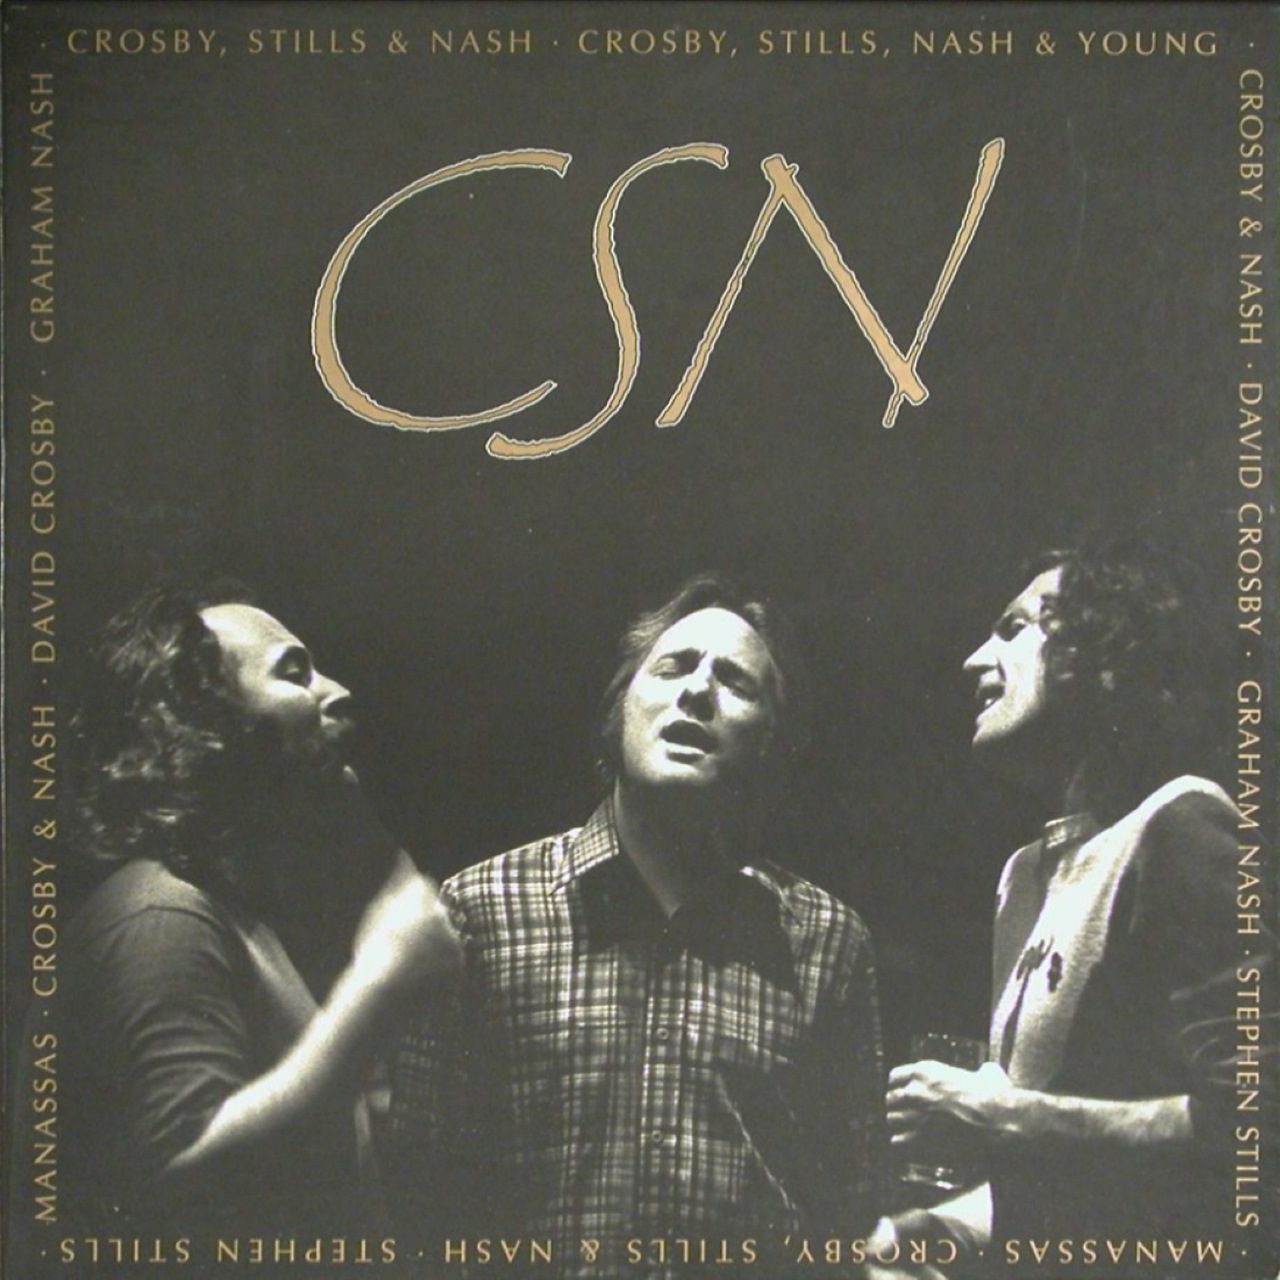 Crosby, Stills & Nash – Crosby, Stills & Nash cover album